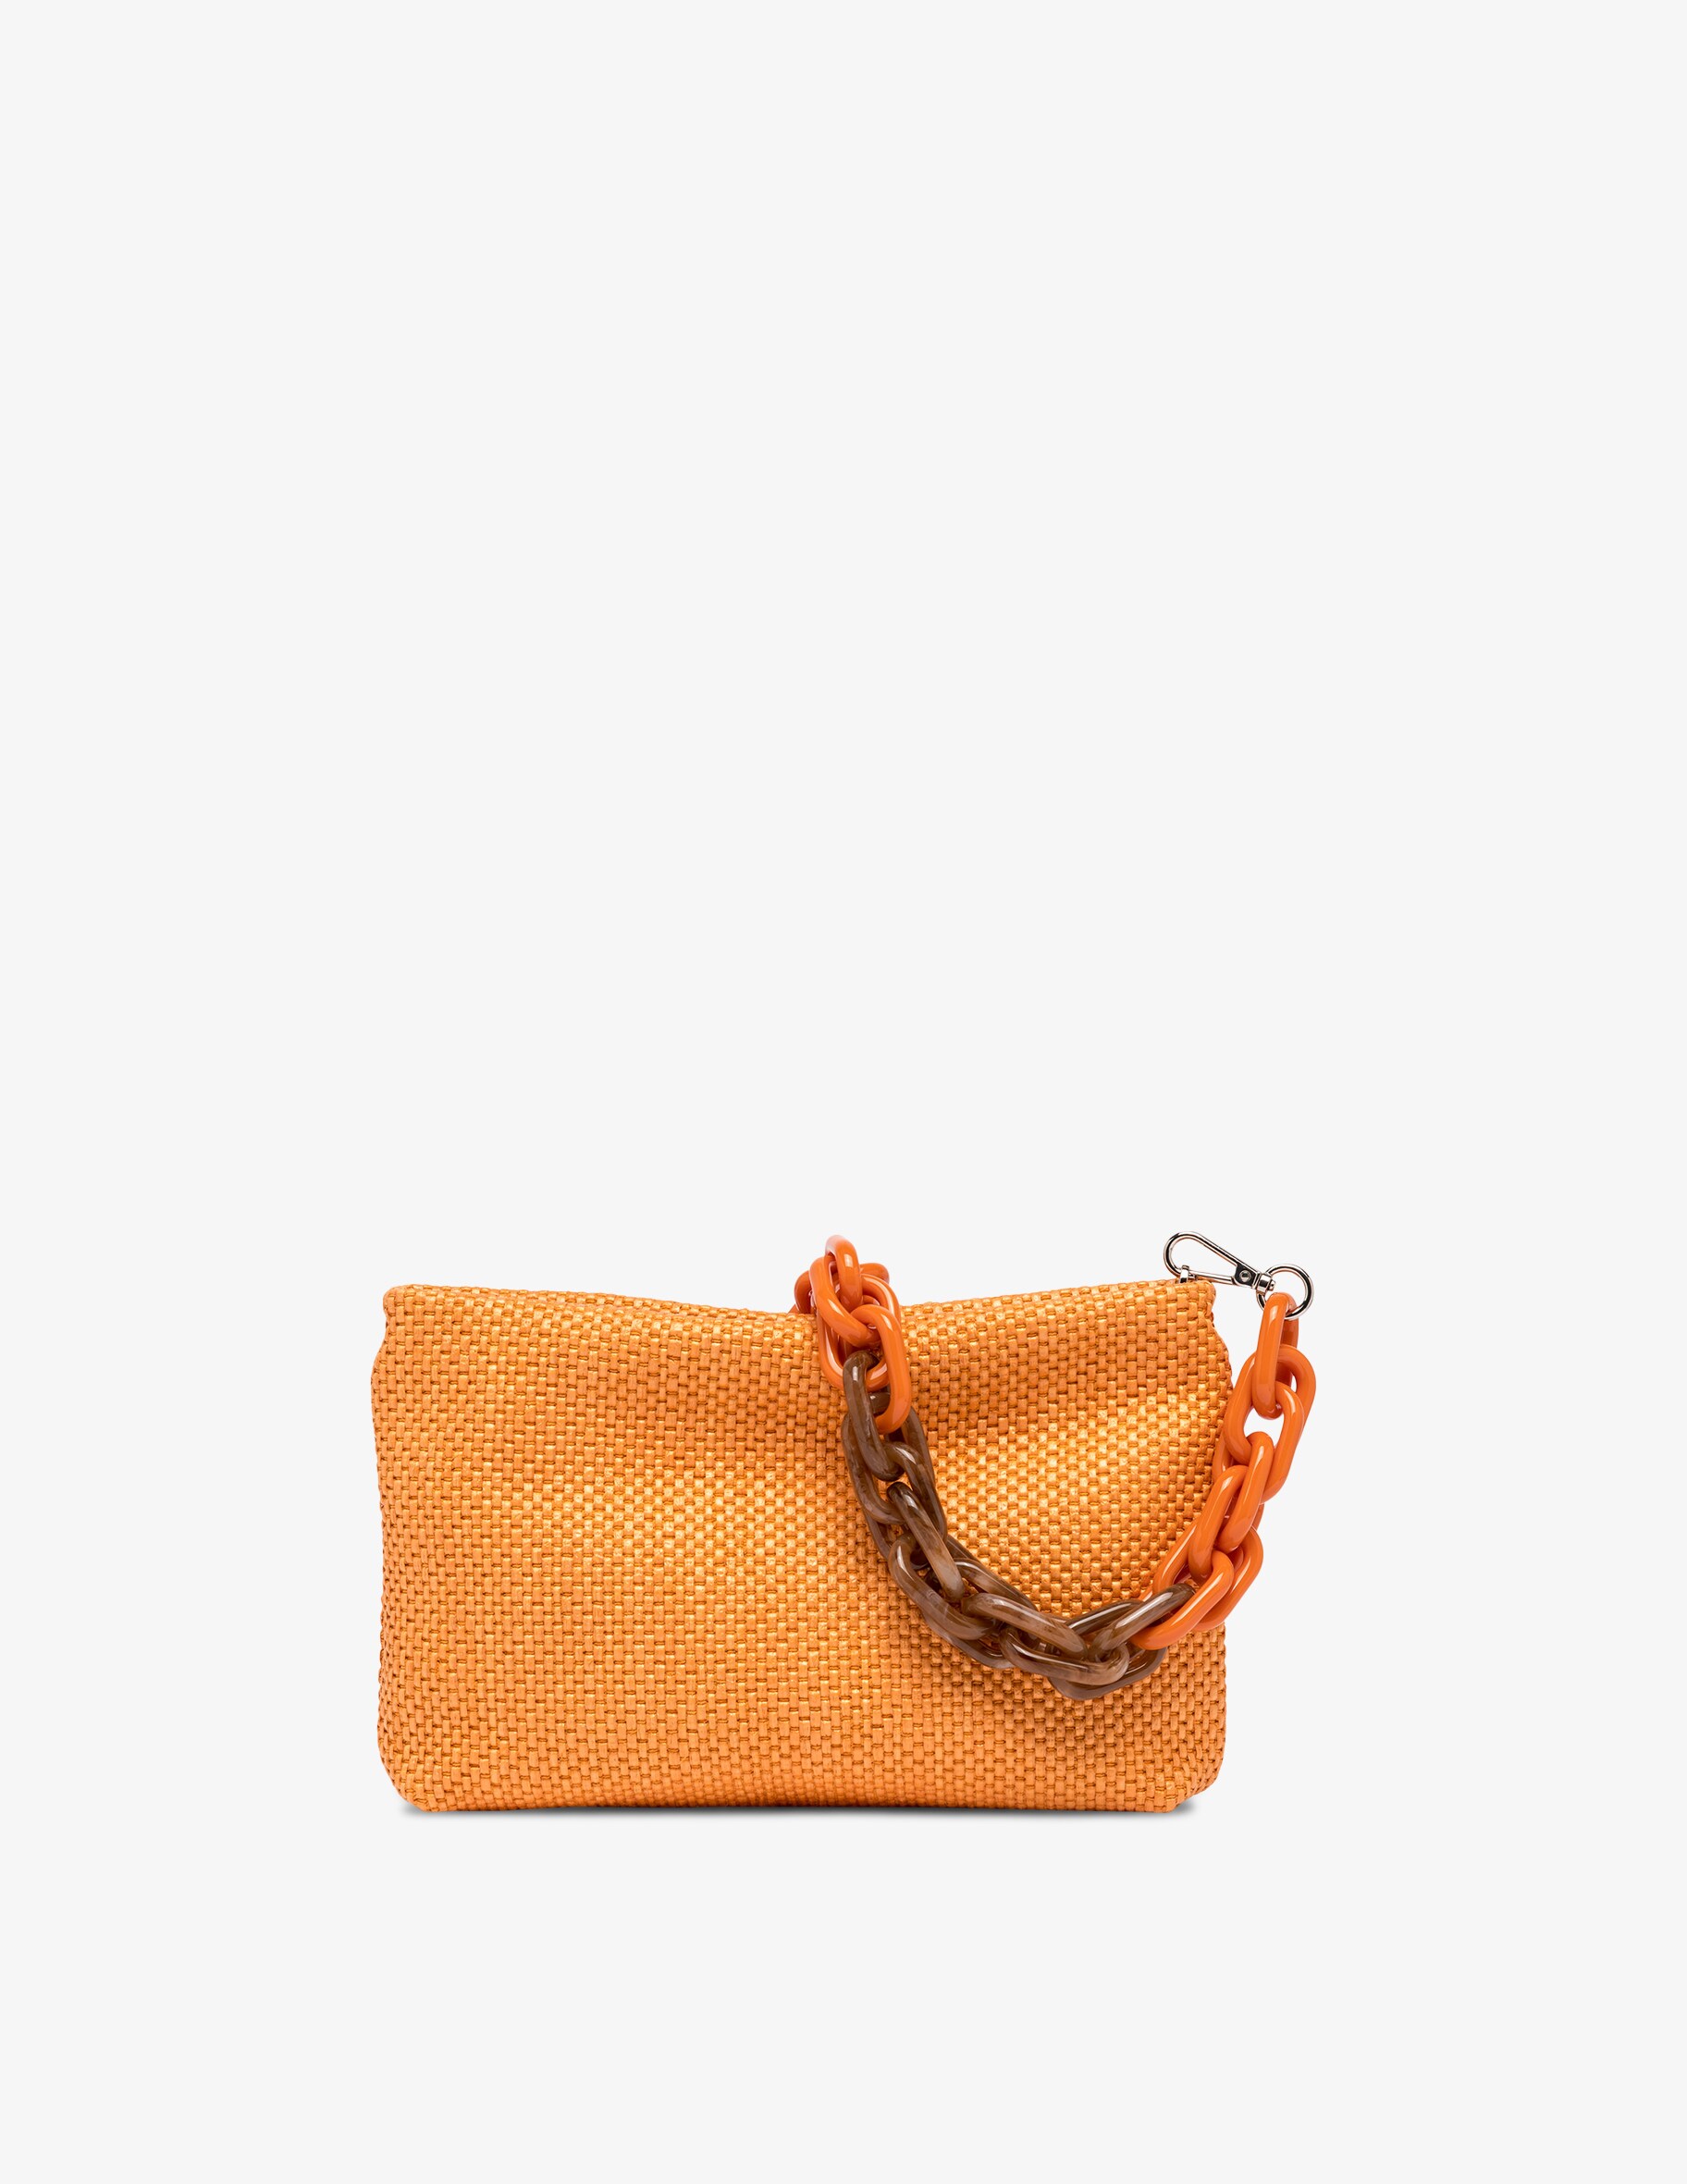 Сумка через плечо Brenda S Gianni Chiarini Firenze, оранжевый сумка superlight gianni chiarini цвет natural